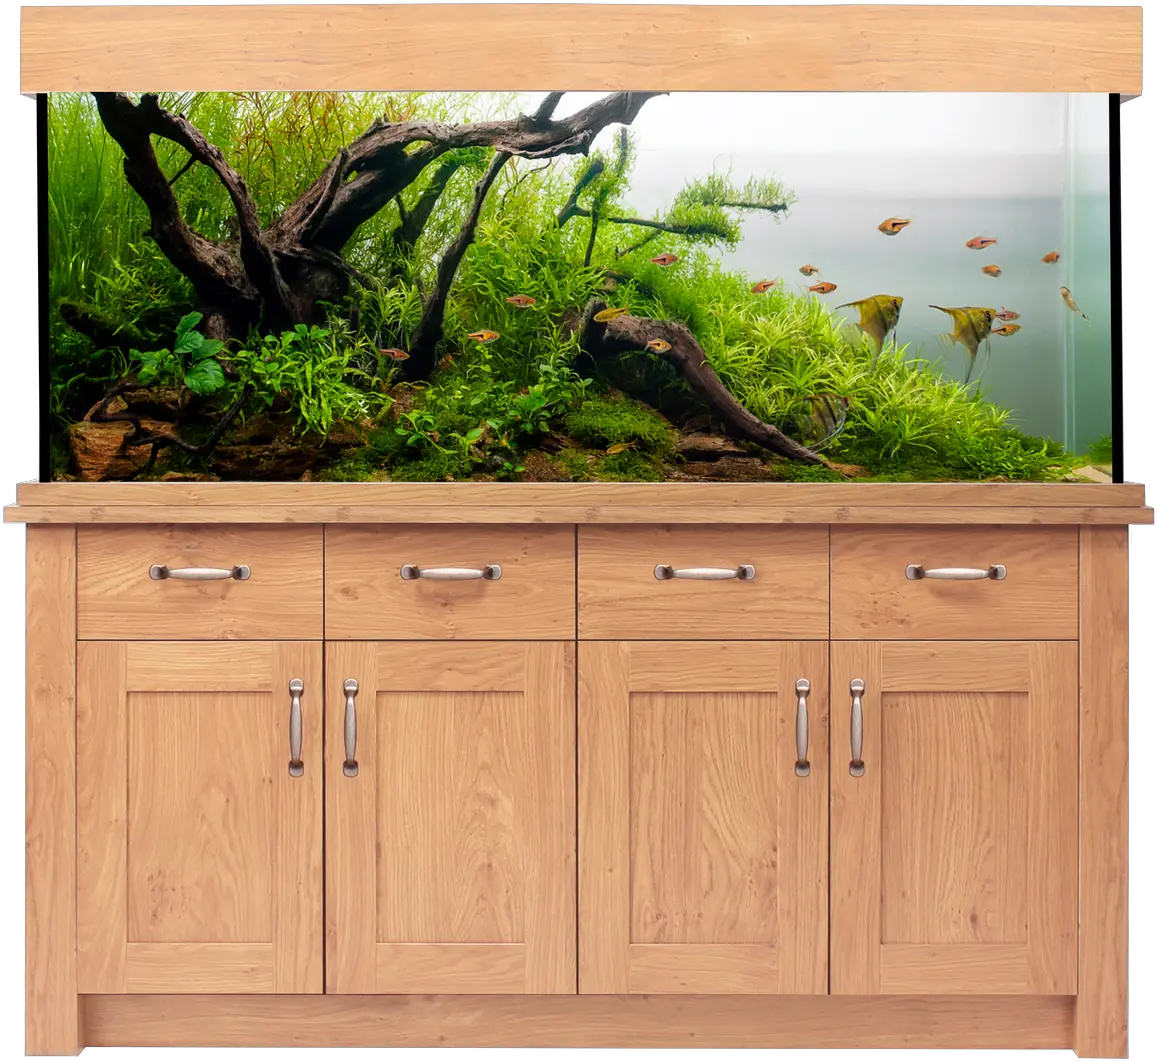 Aqua One Oakstyle Aquarium And Cabinet 300 Litres Nature Aquarium With Driftwood Png Fish Bowl Transparent Background